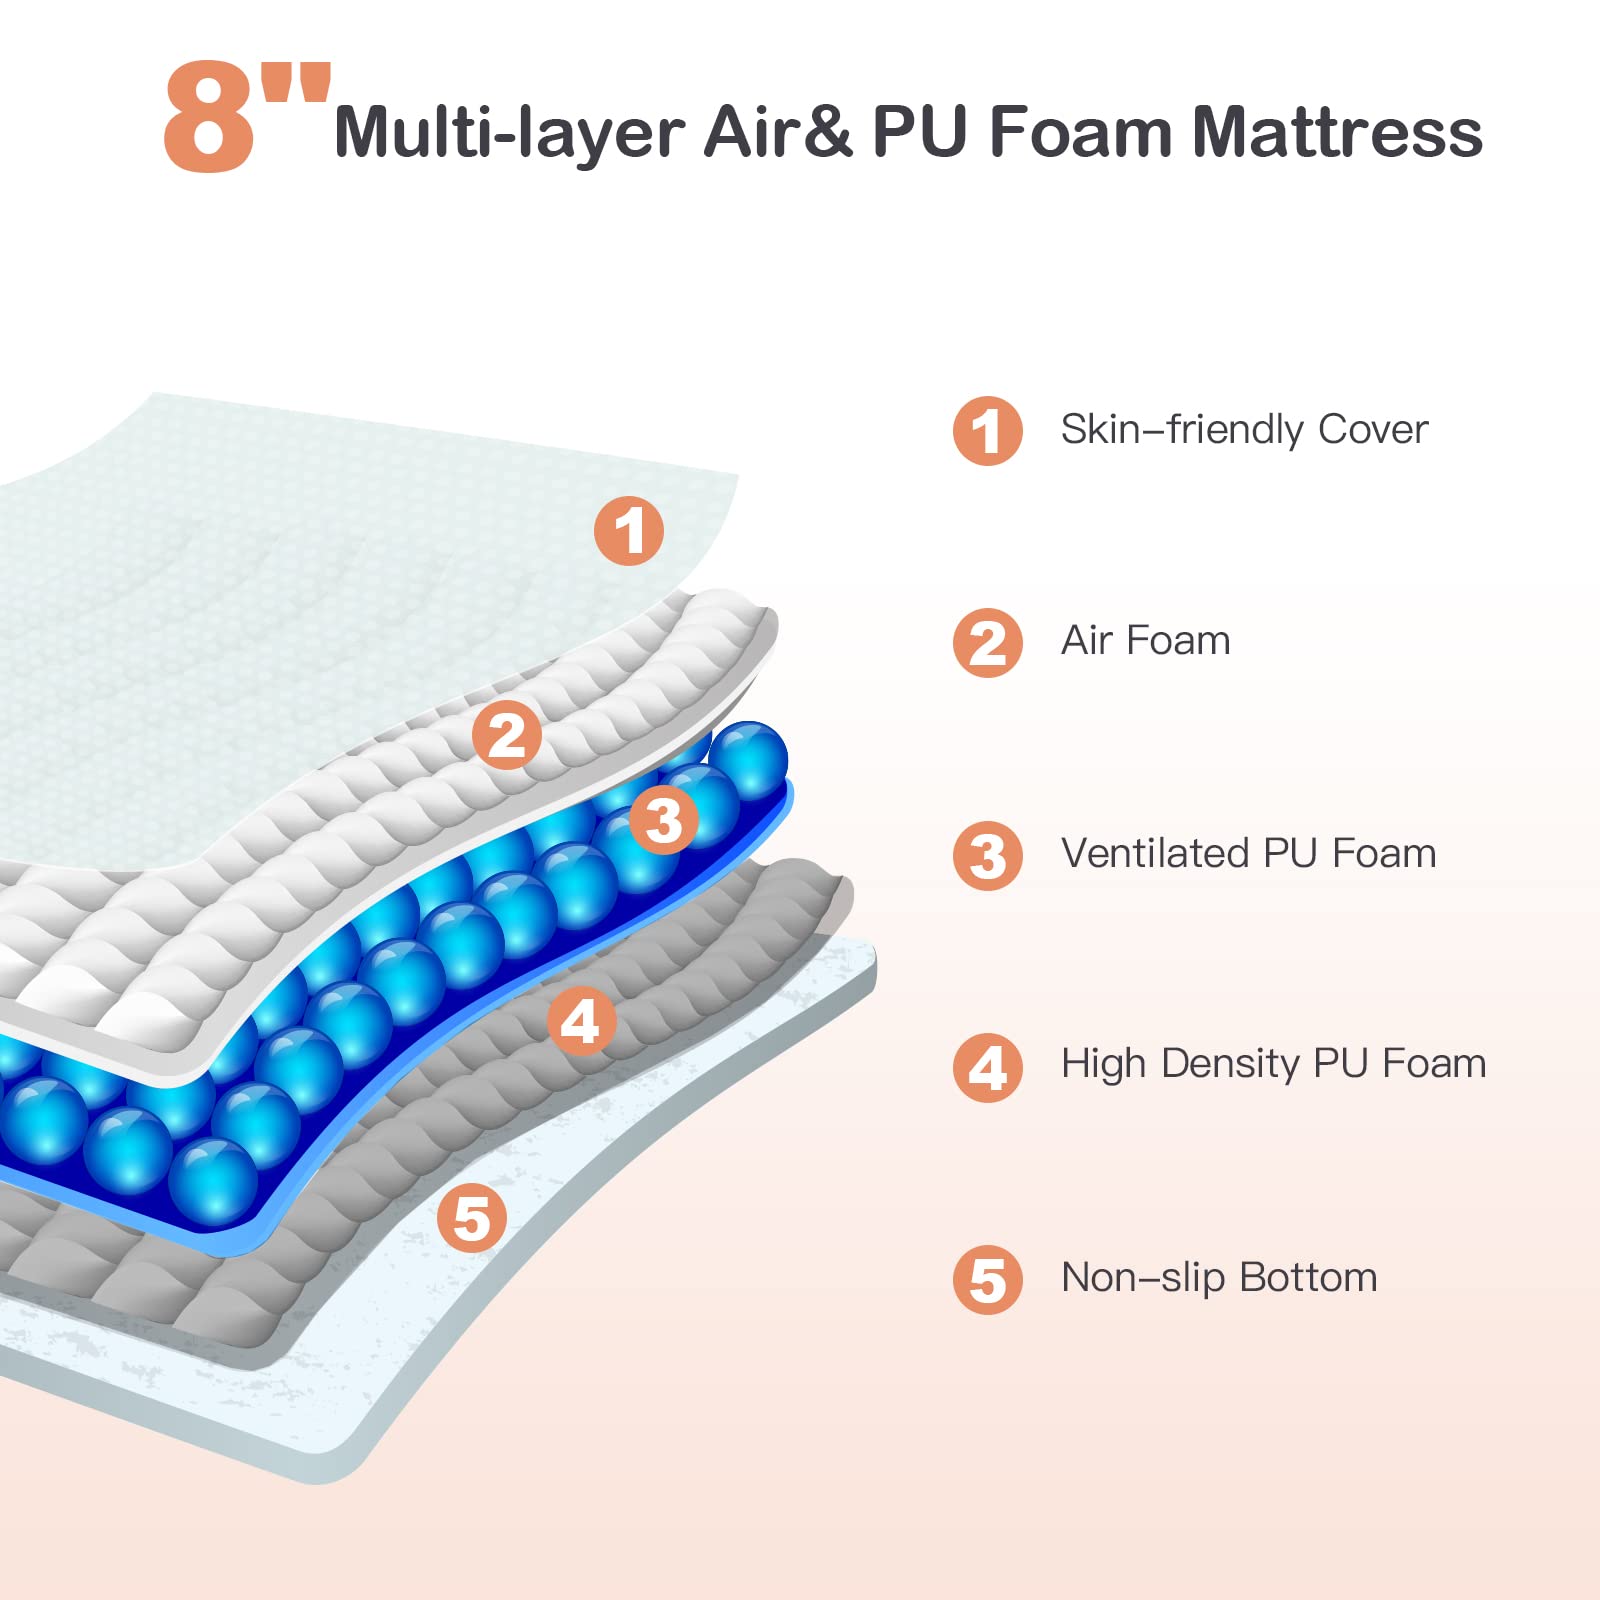 Giantex Full Mattress 8 Inch, Air Foam for Cool Sleep & Spine Protection